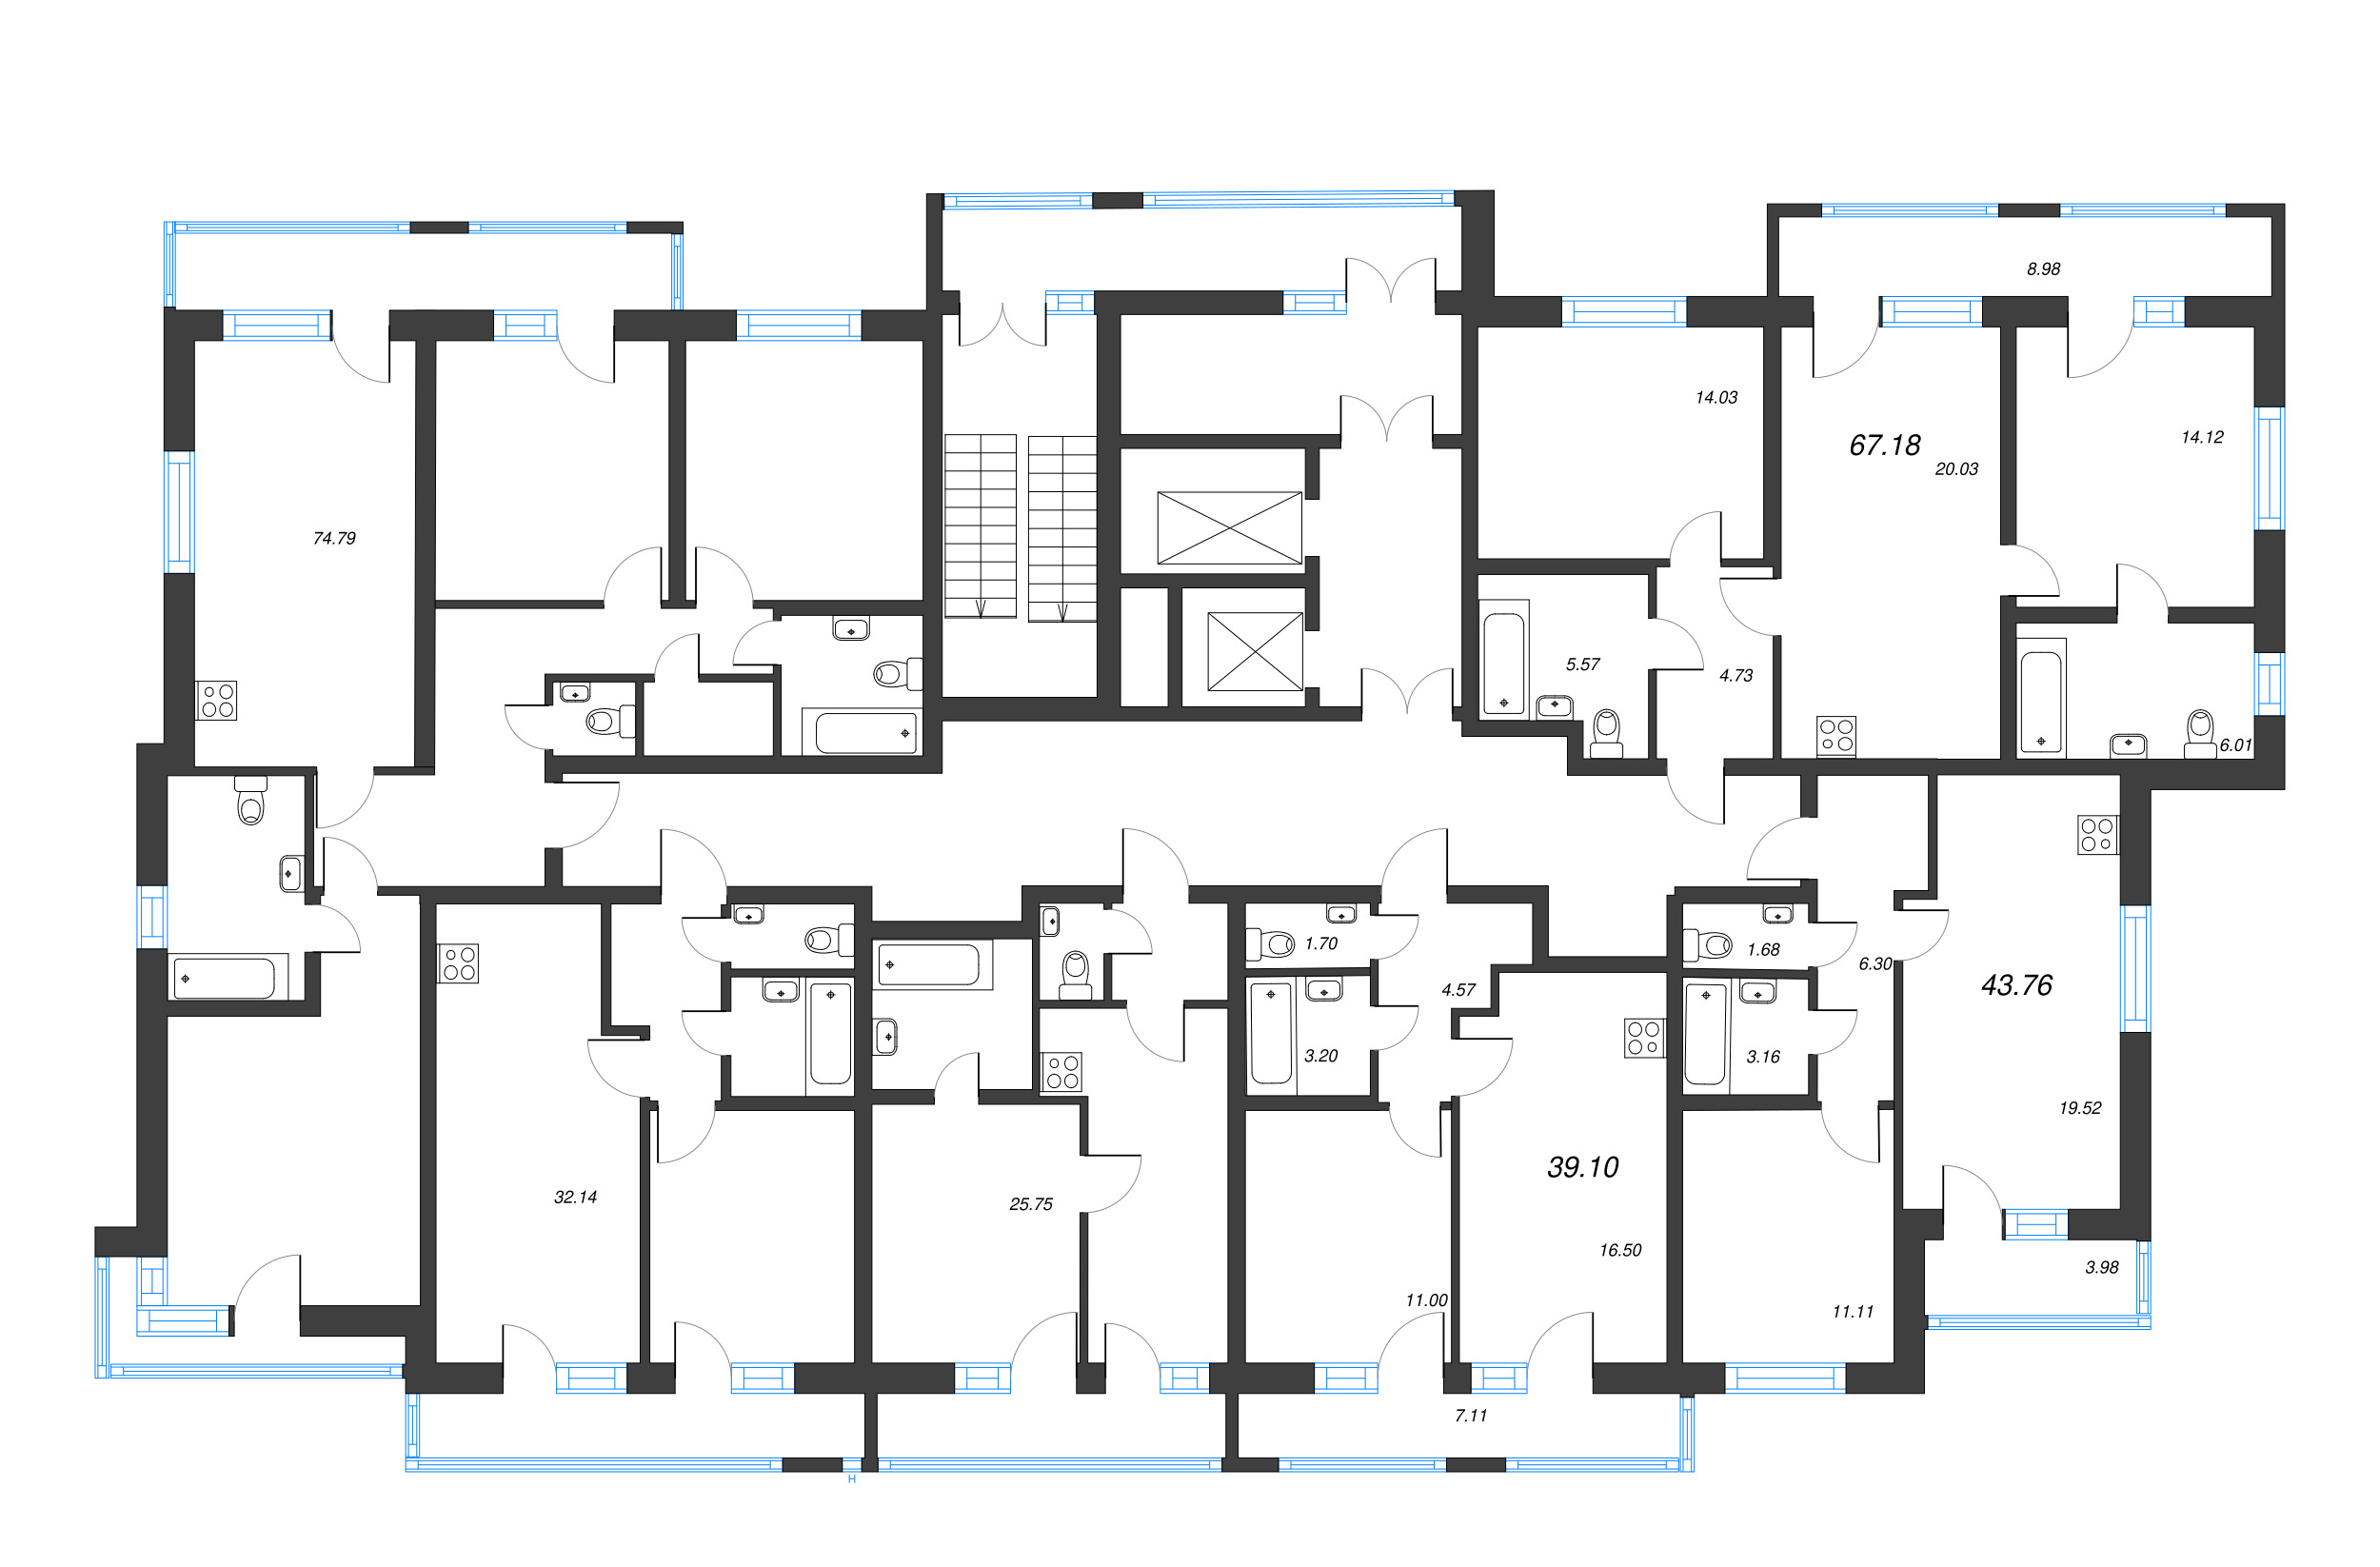 3-комнатная (Евро) квартира, 67.18 м² - планировка этажа